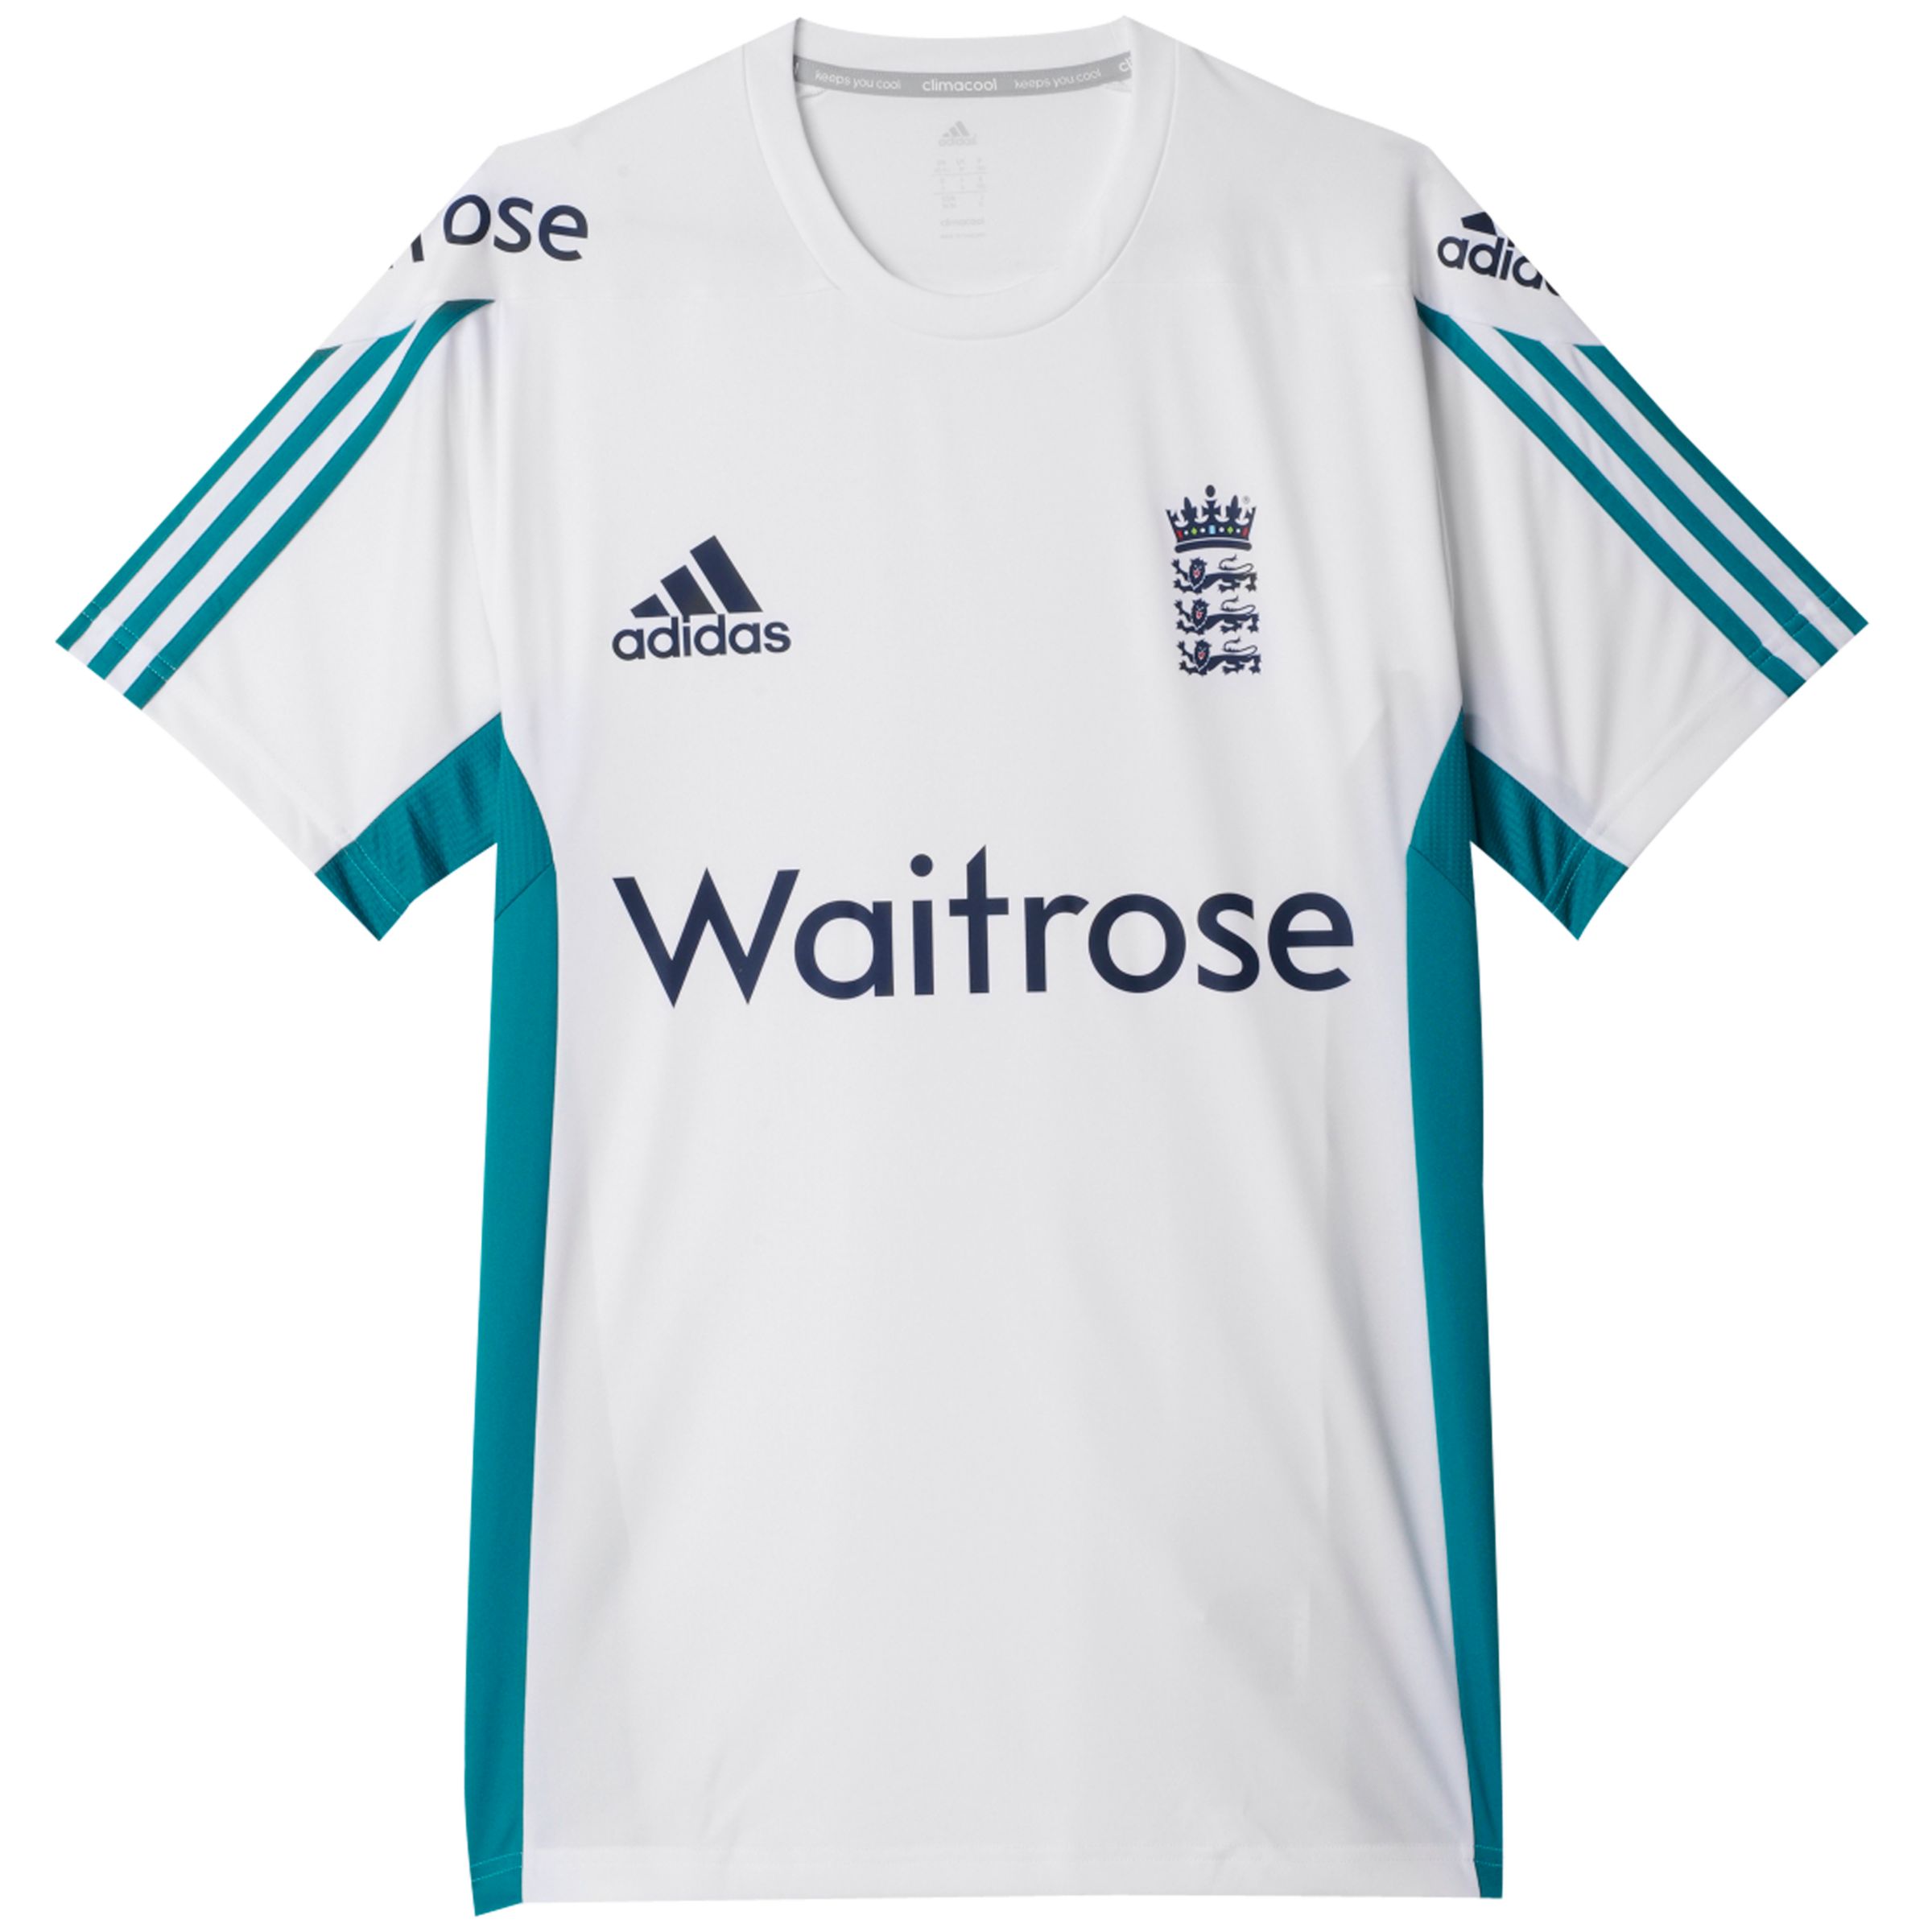 england cricket training shirt